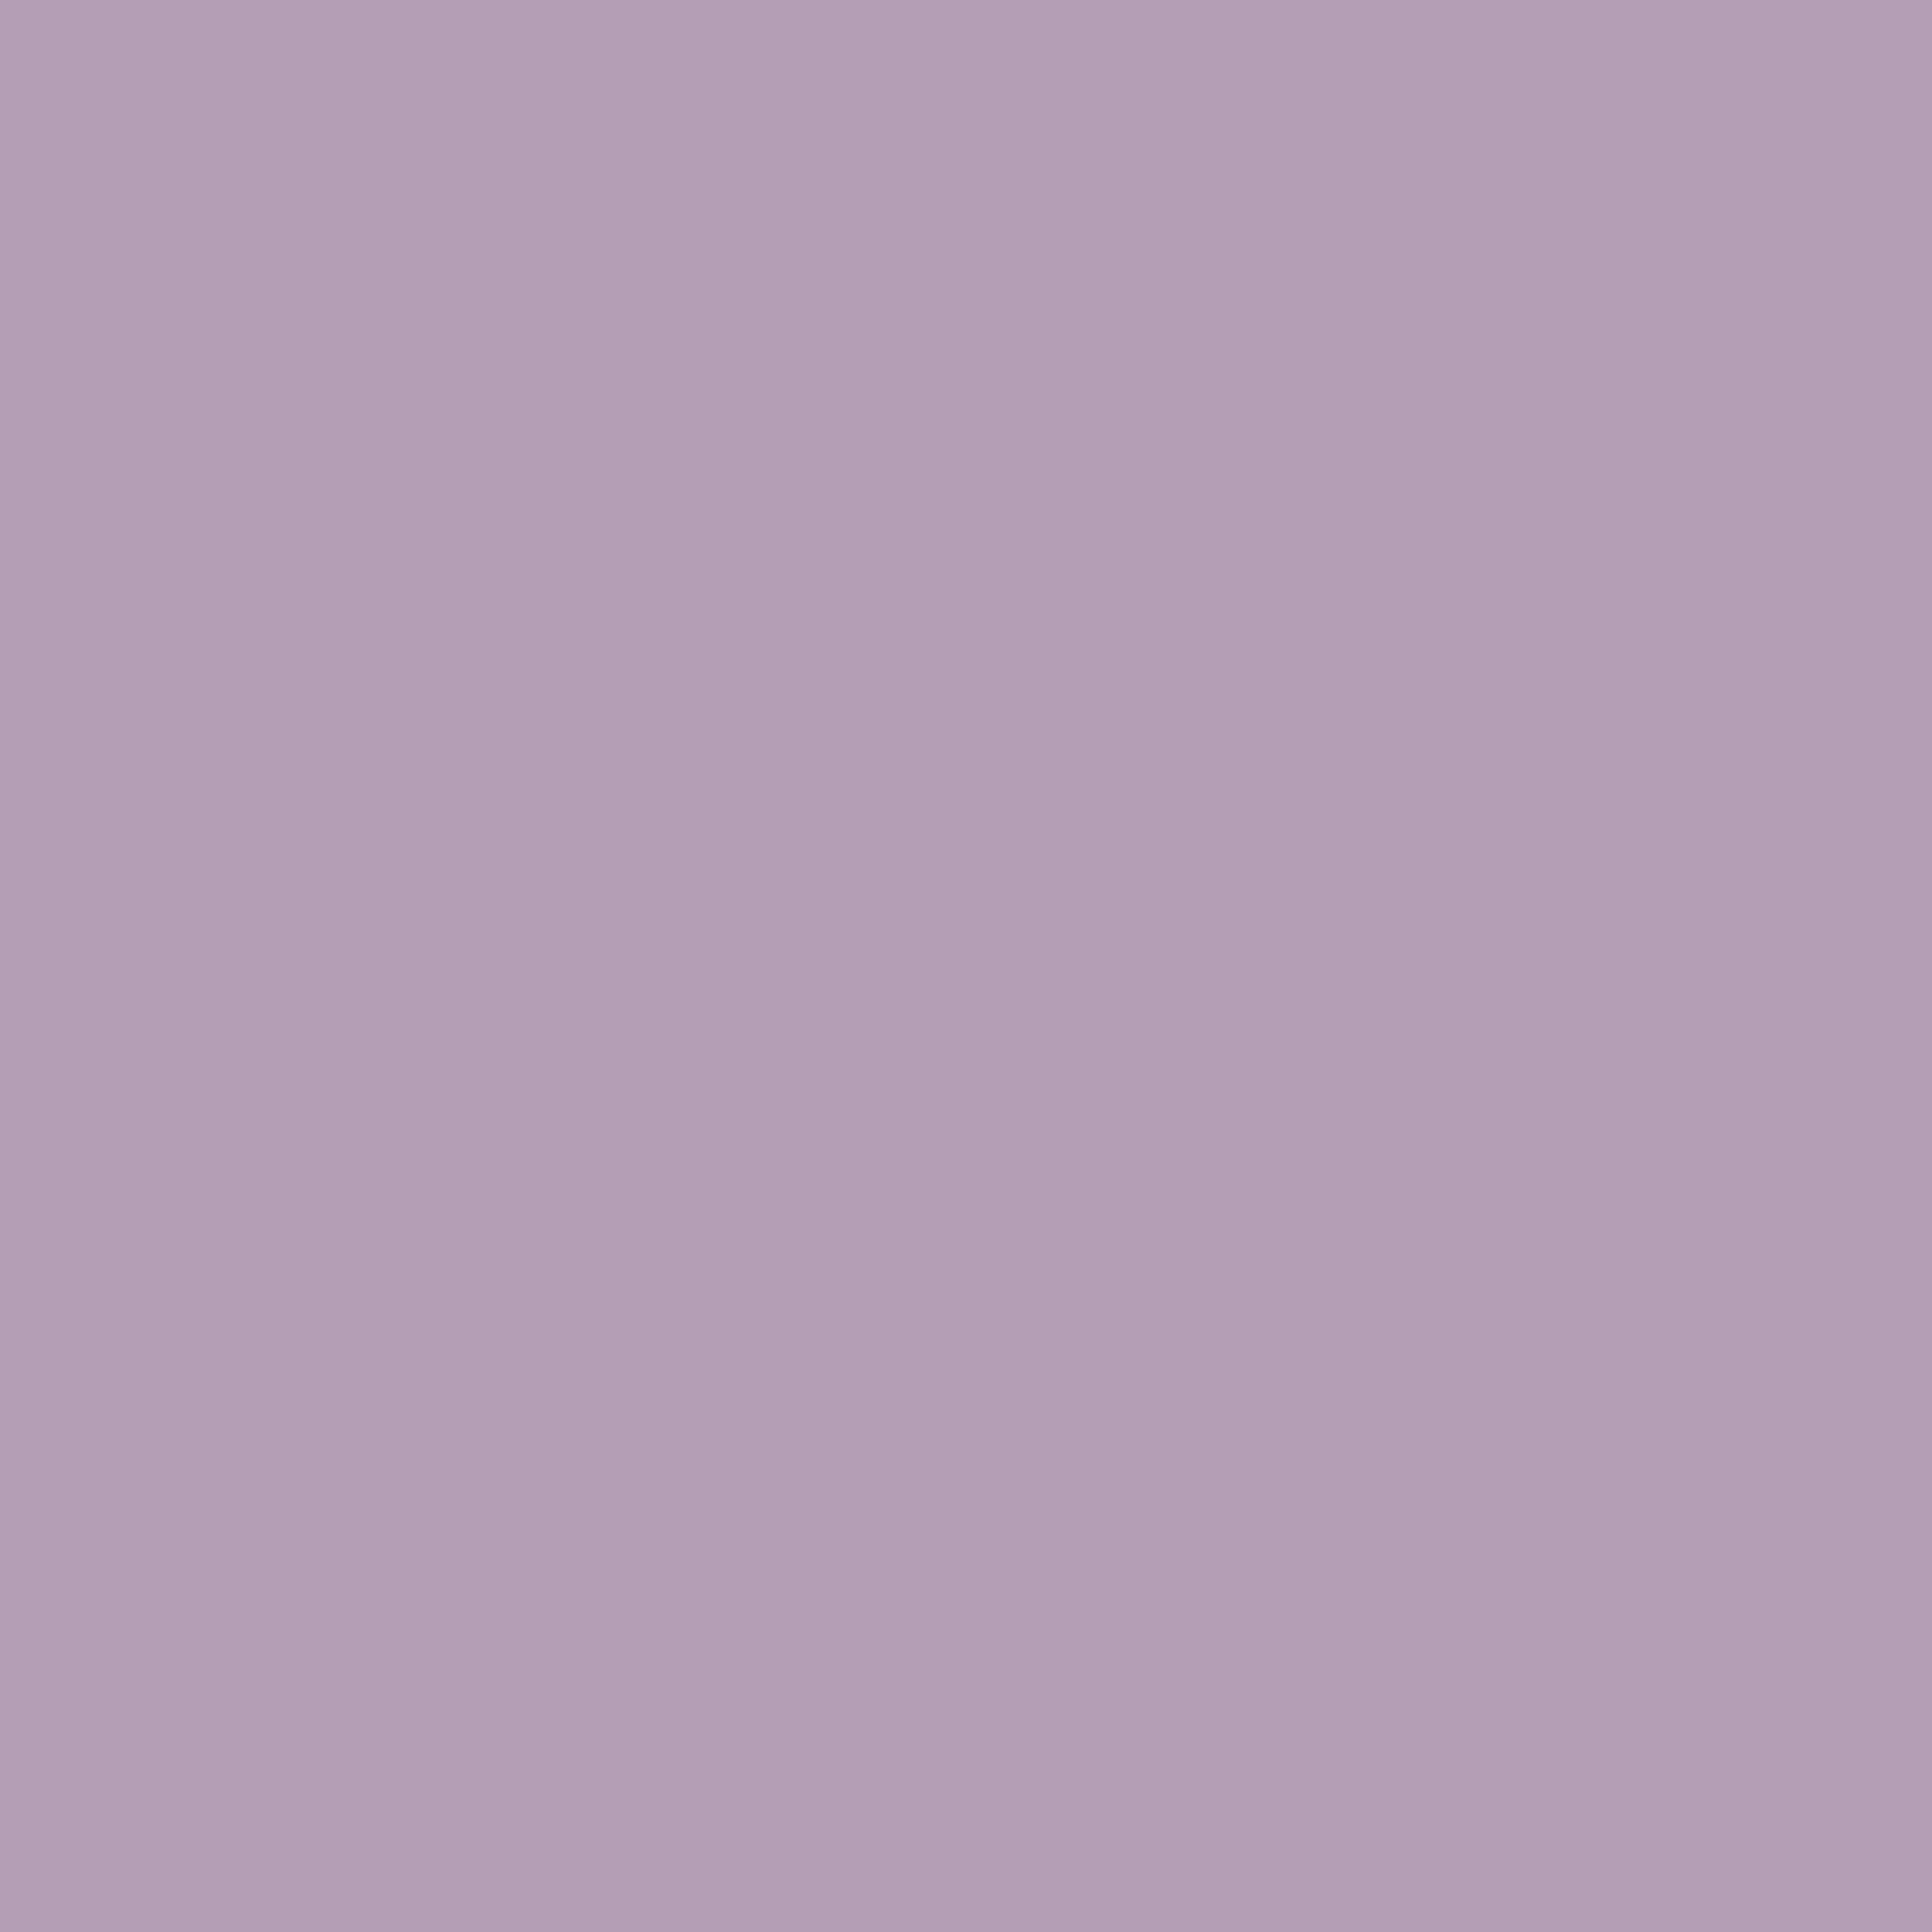 2732x2732 Pastel Purple Solid Color Background